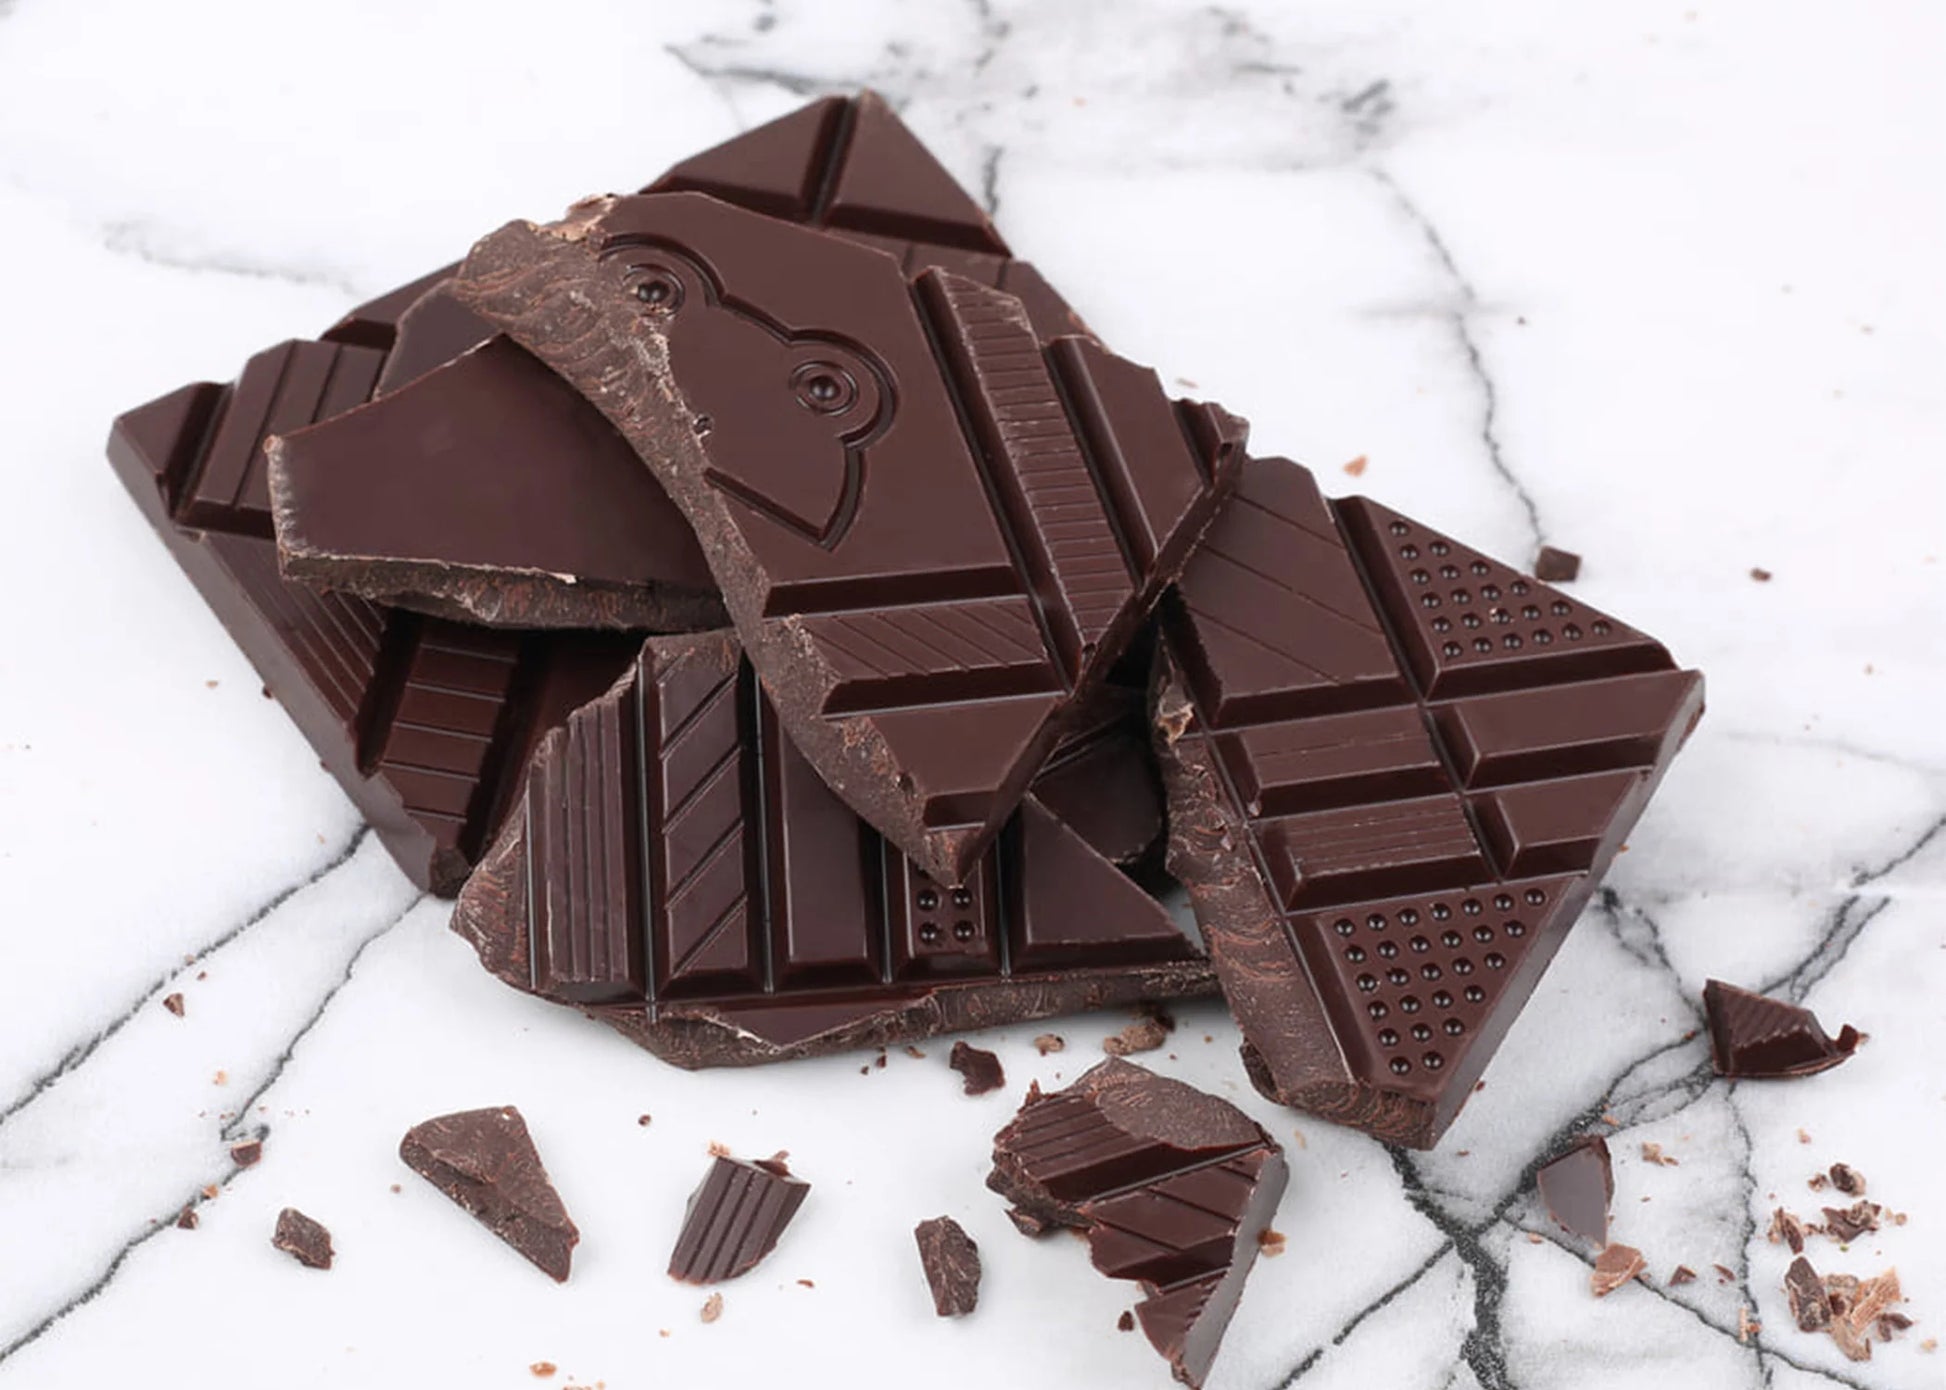 Le chocolat des Français Chocolate Box Trio 